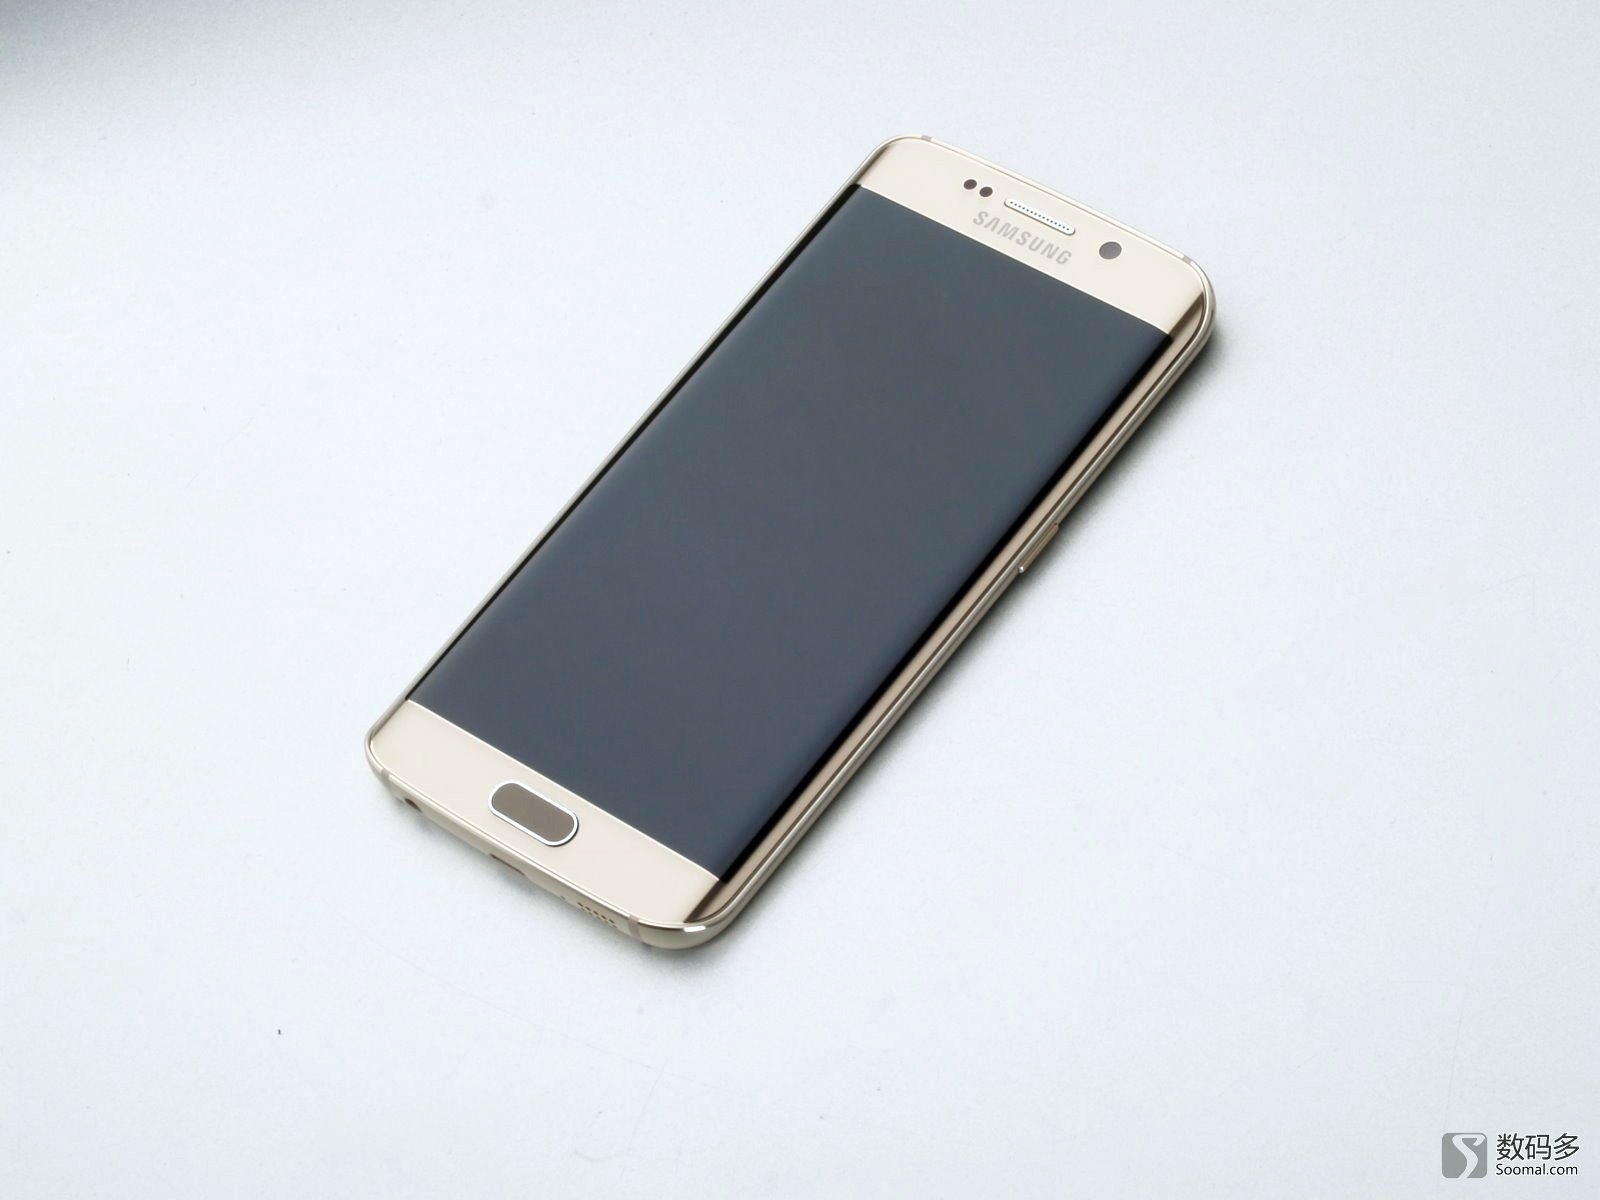 Samsung Galaxy S6 Mini gelistet